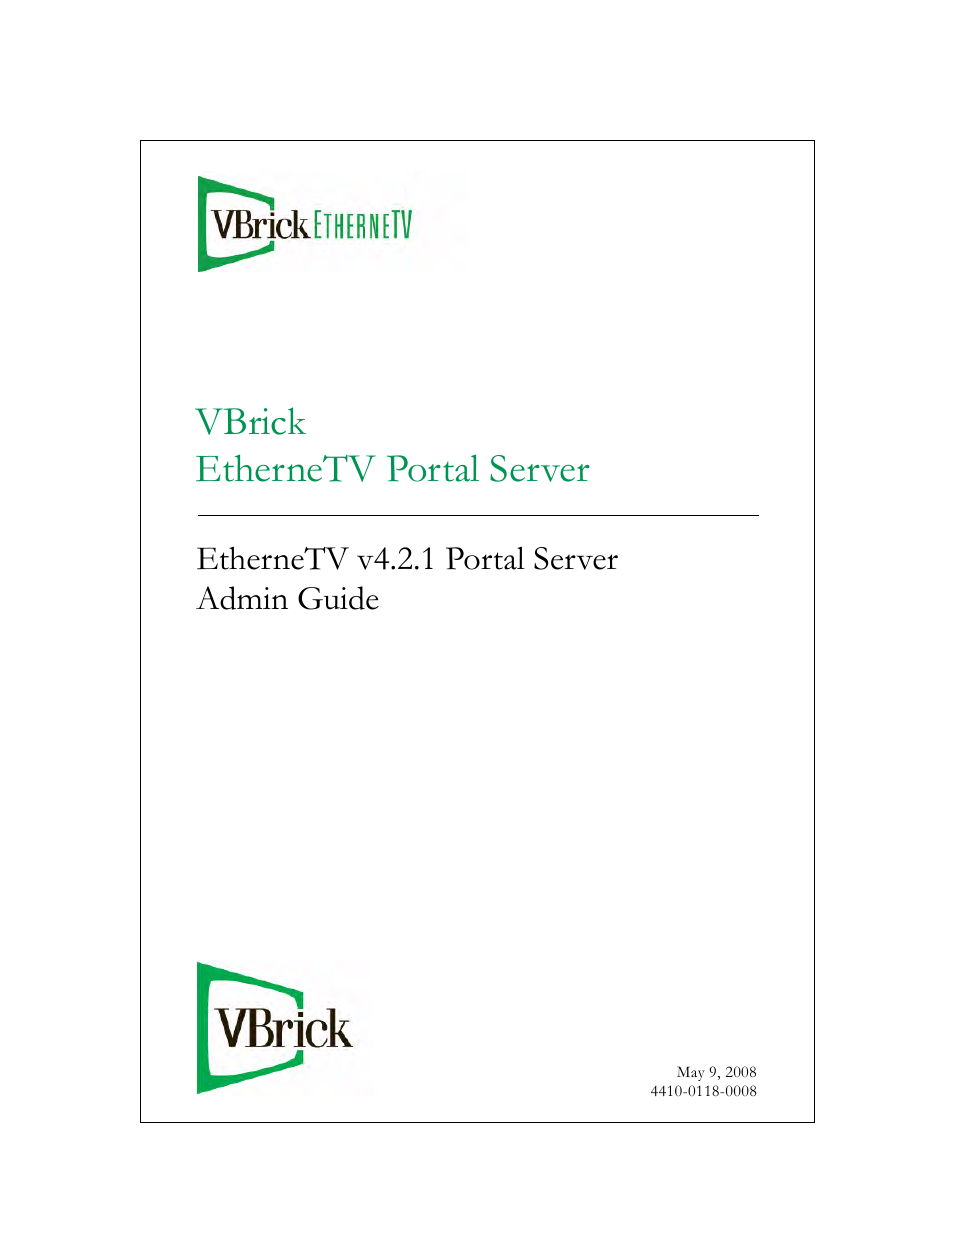 Portal Server ETV v4.2.1